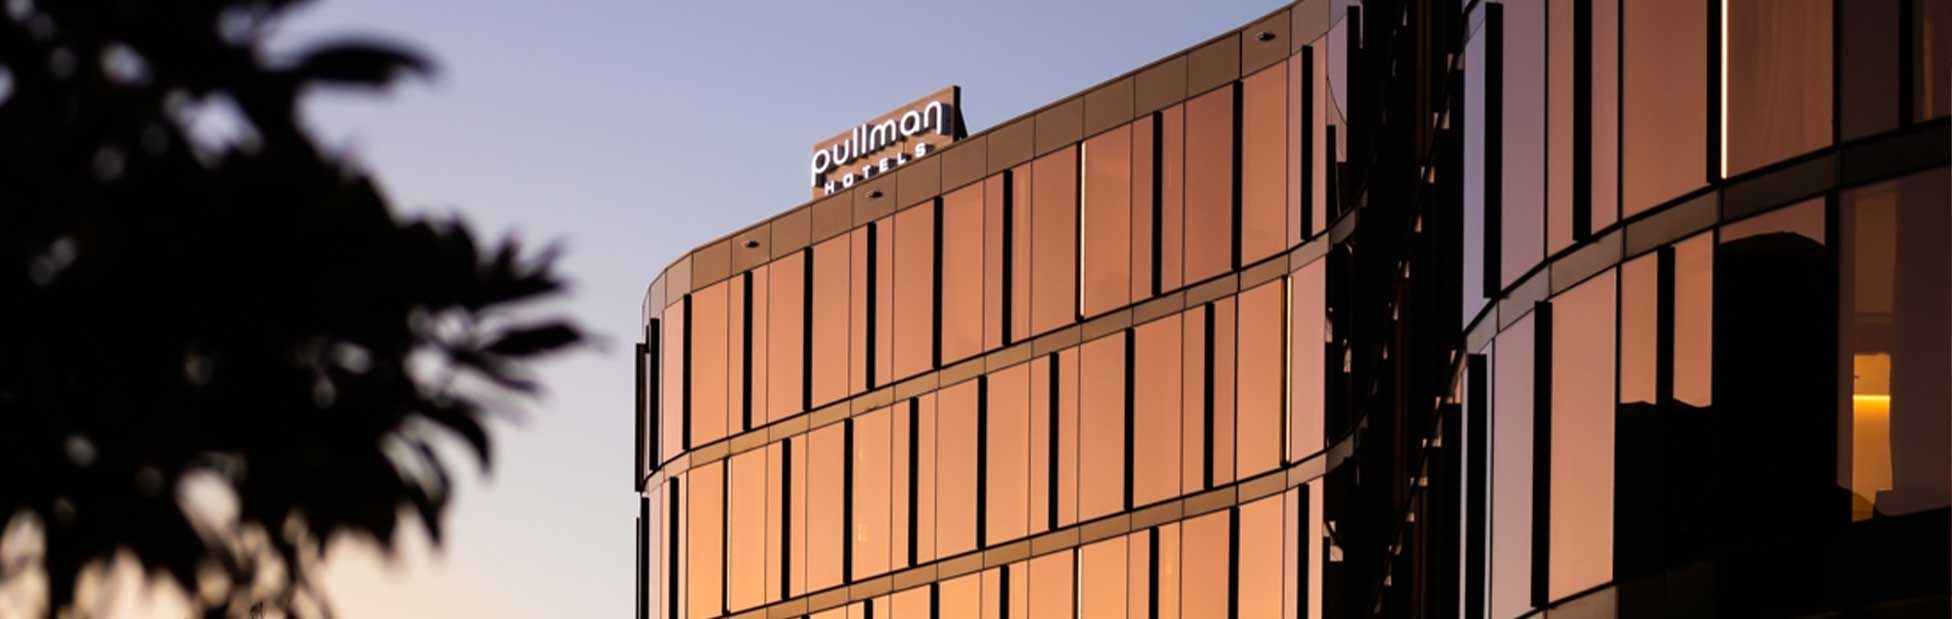 Pullman hotel